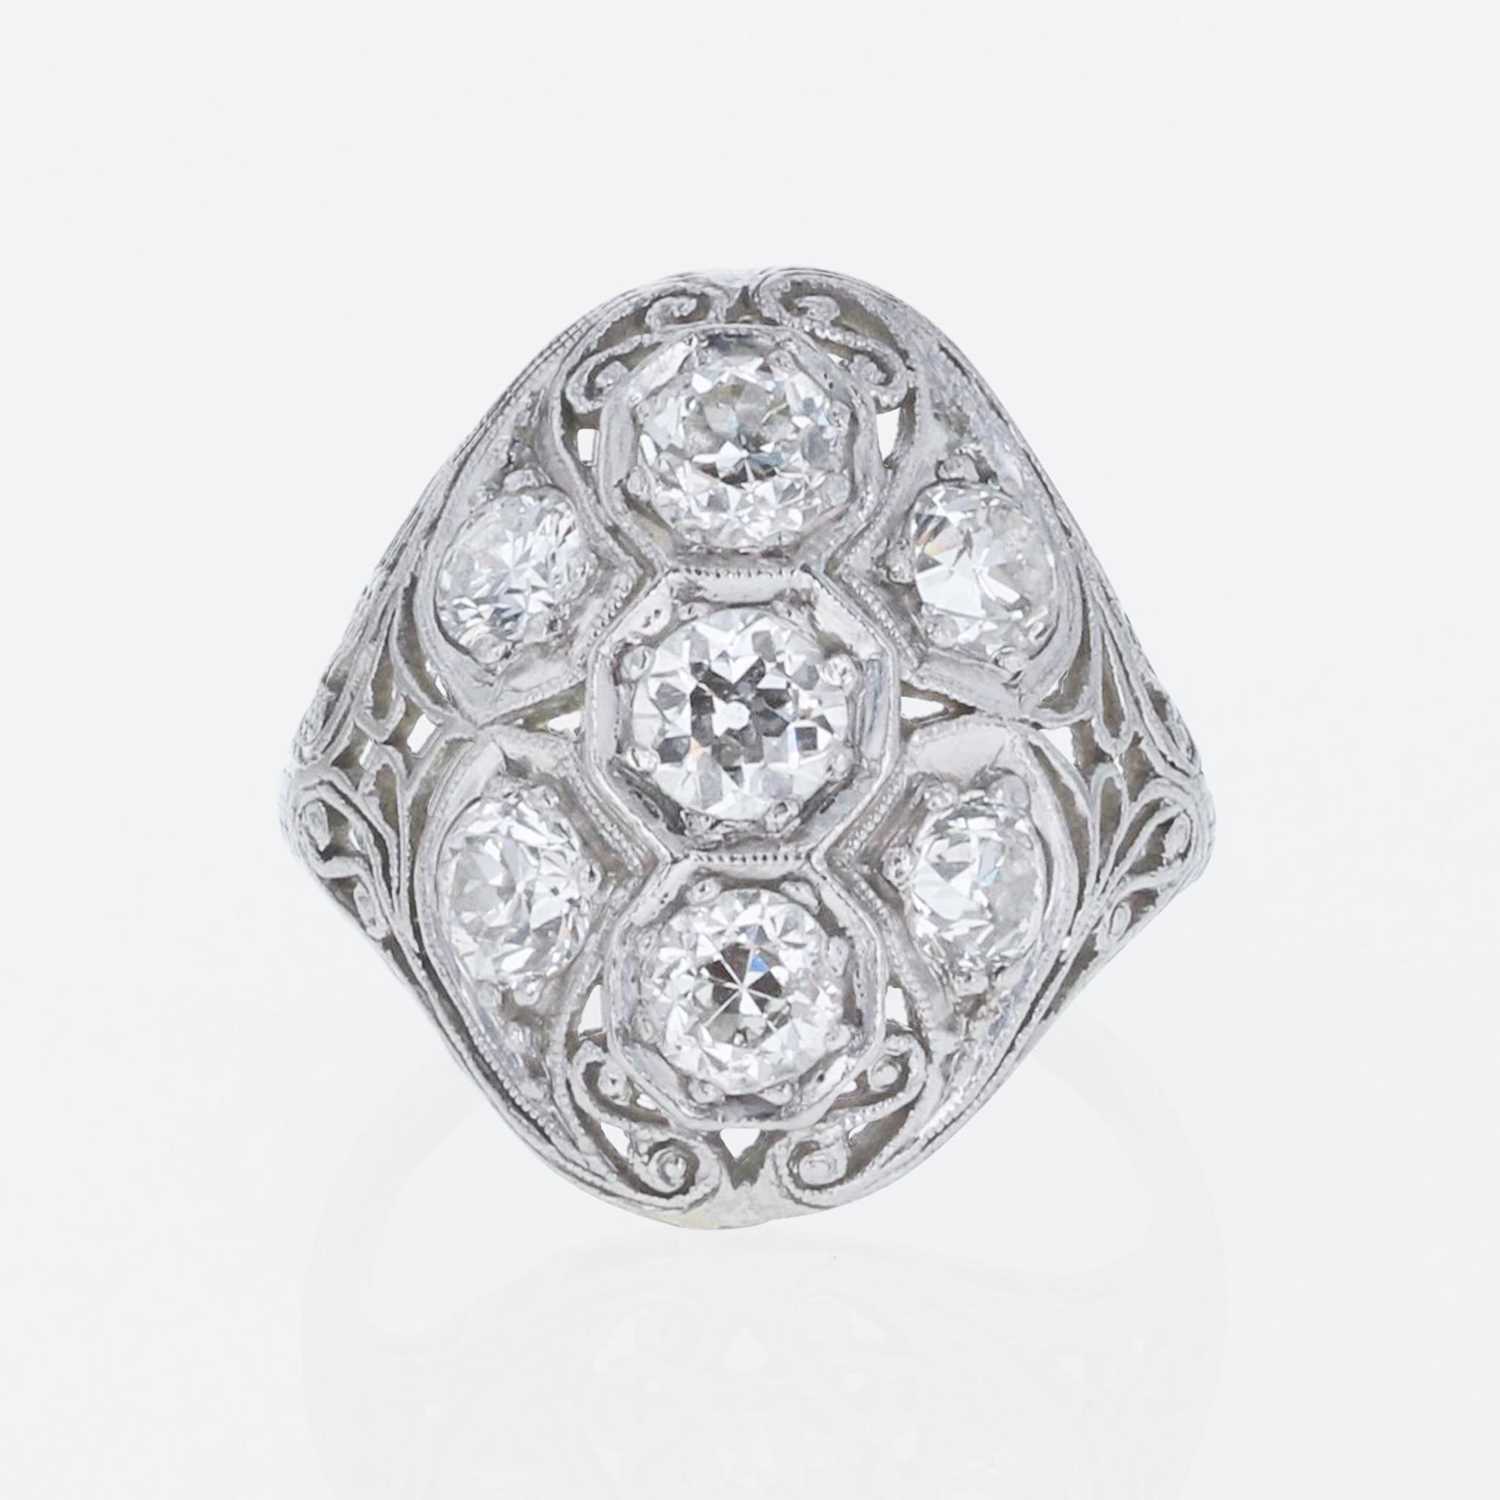 Lot 203 - An Art Deco Platinum and Diamond Ring